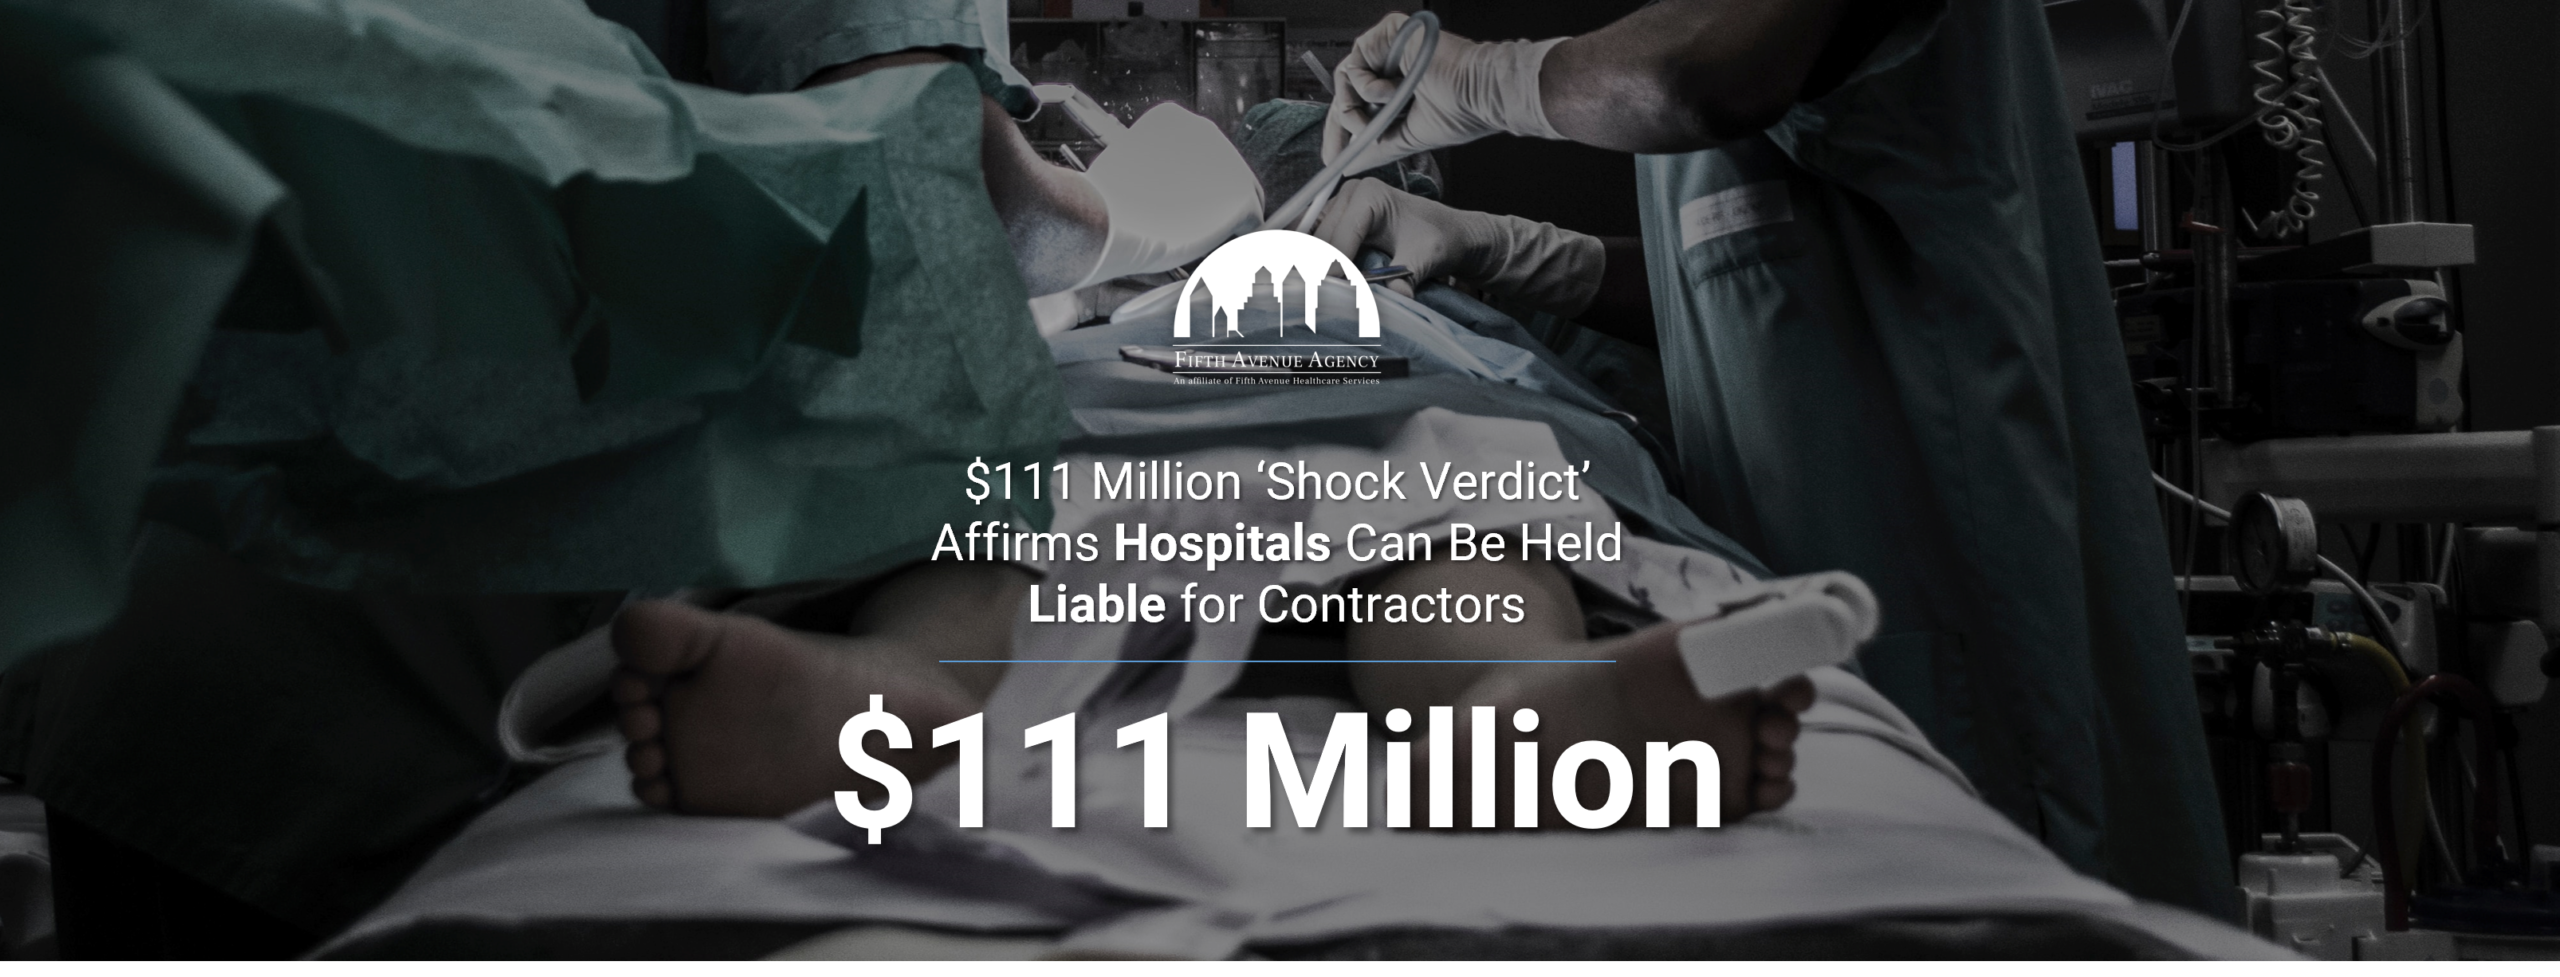 $111 Million Dollar Medical Malpractice Shock Verdict FifthAvenueAgency.com